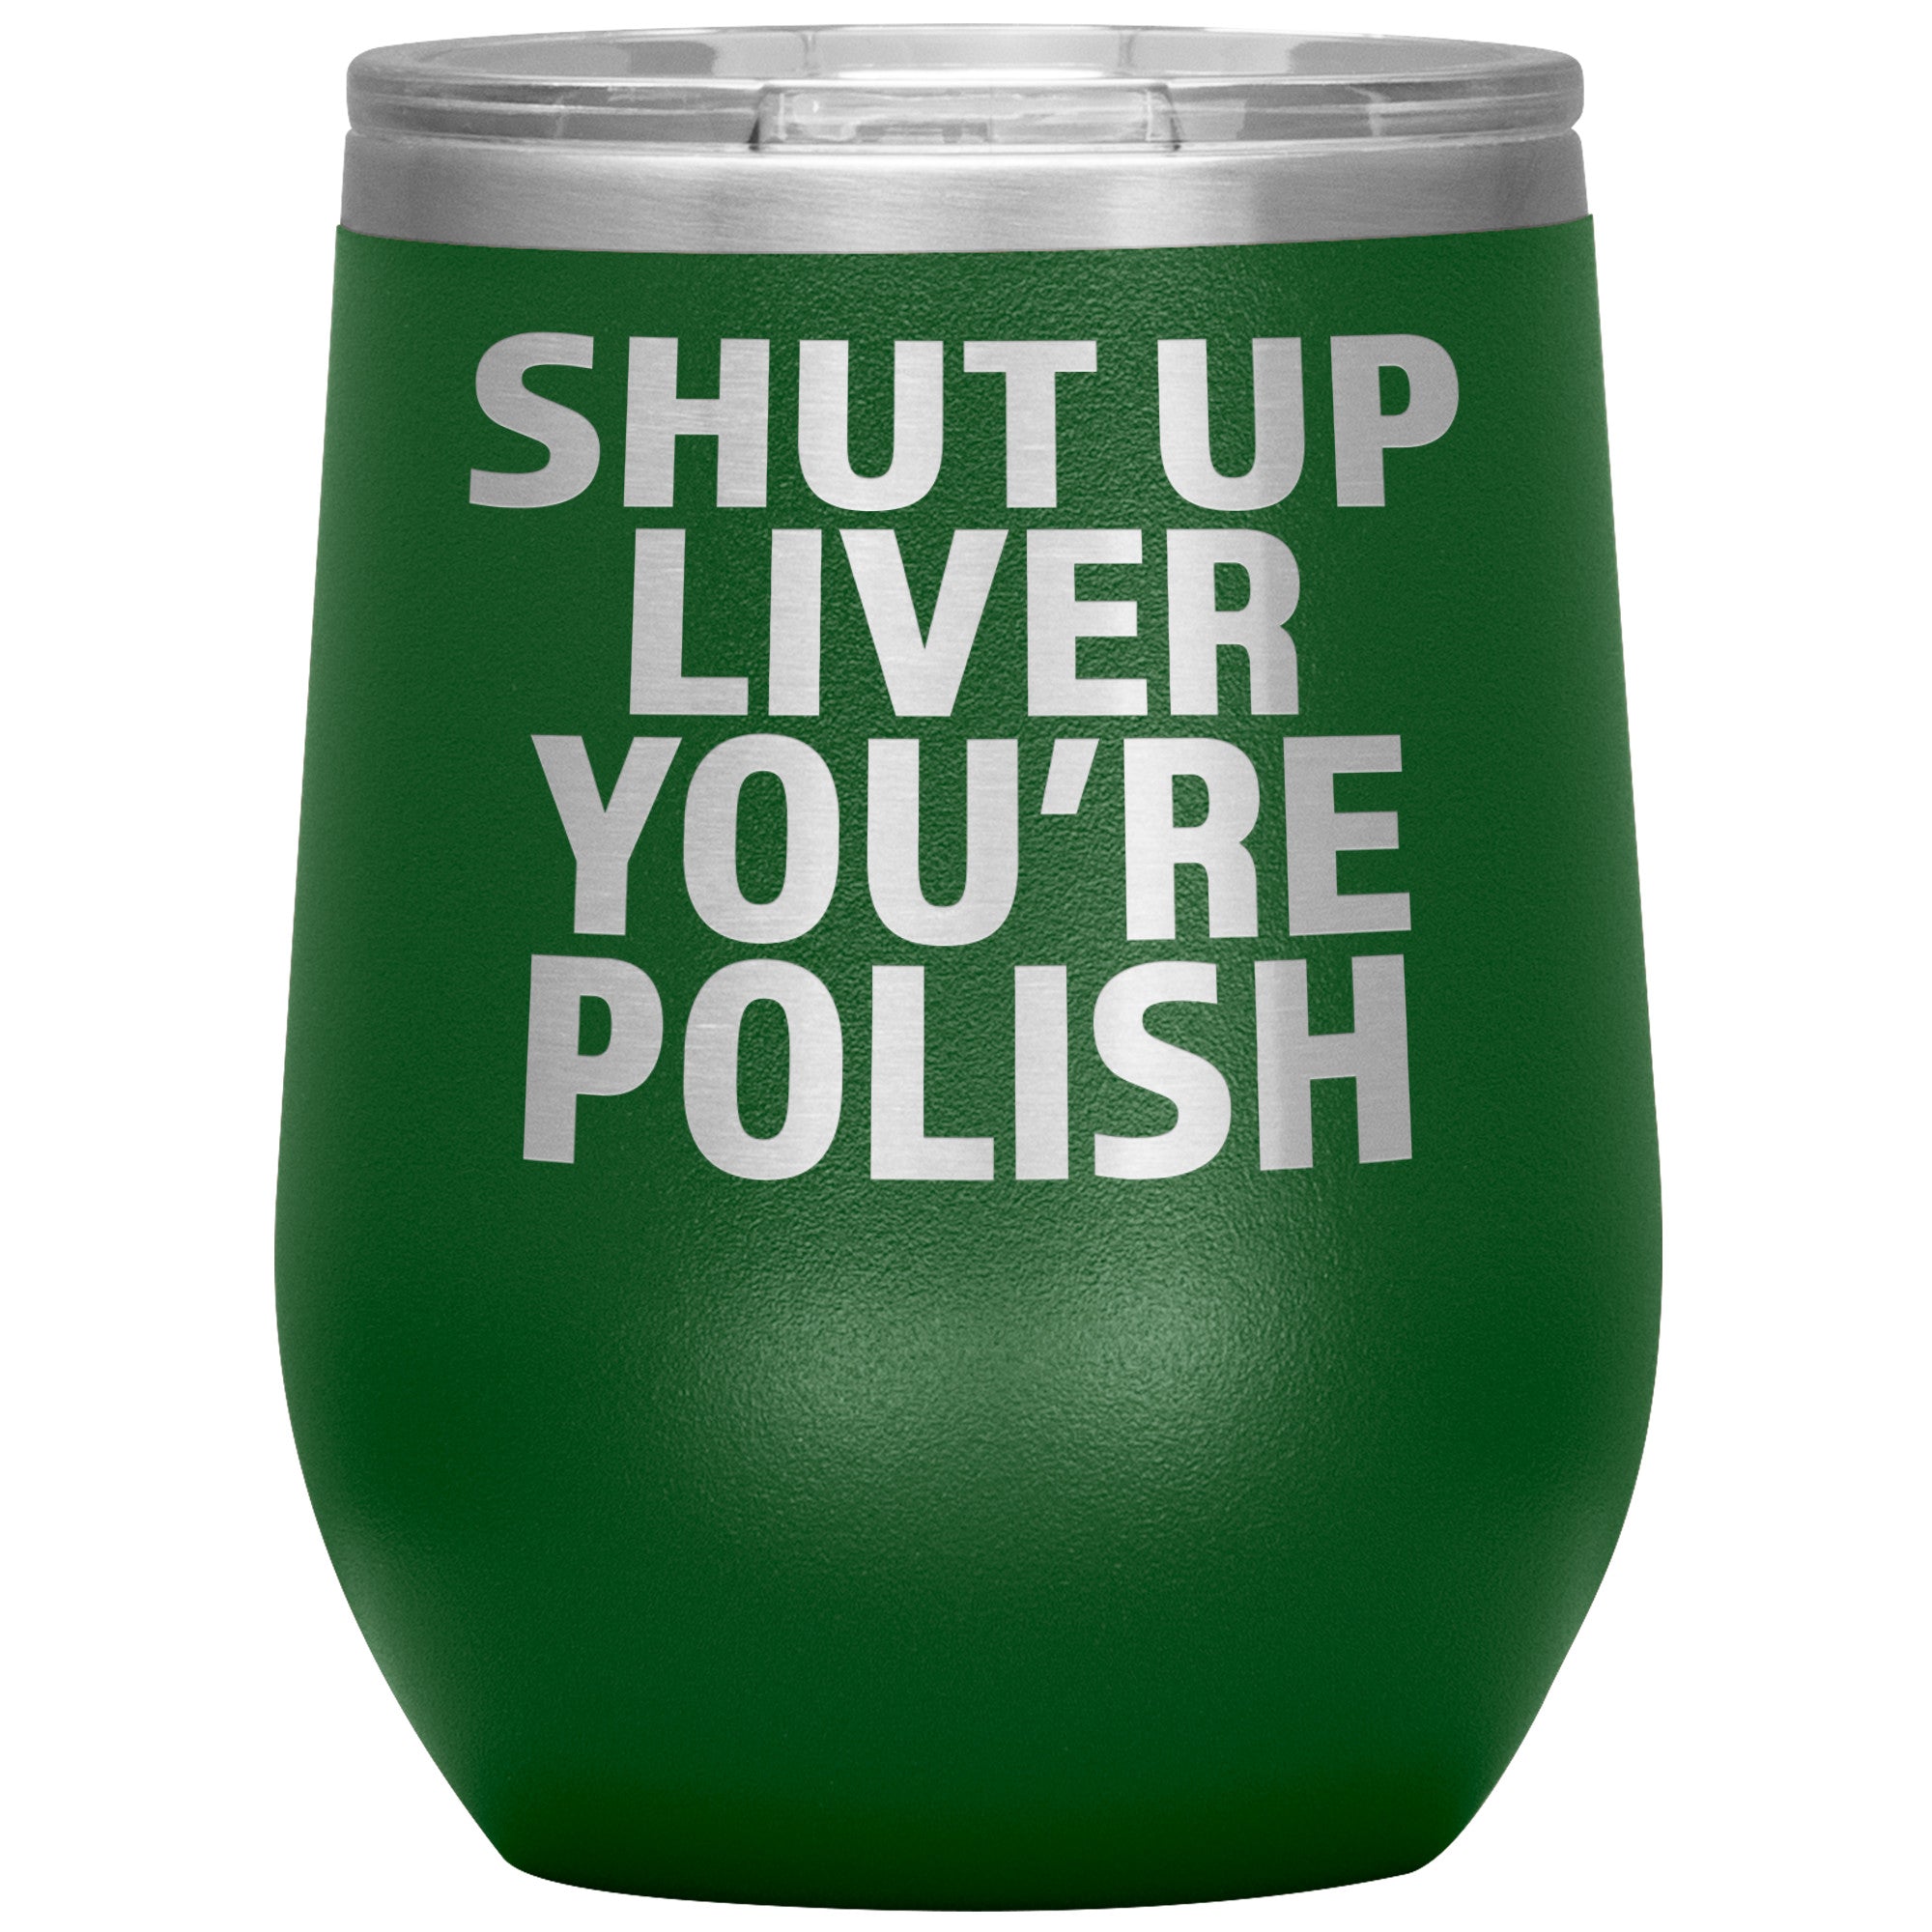 Shut Up Liver You're Polish Insulated Wine Tumbler Tumblers teelaunch Green  